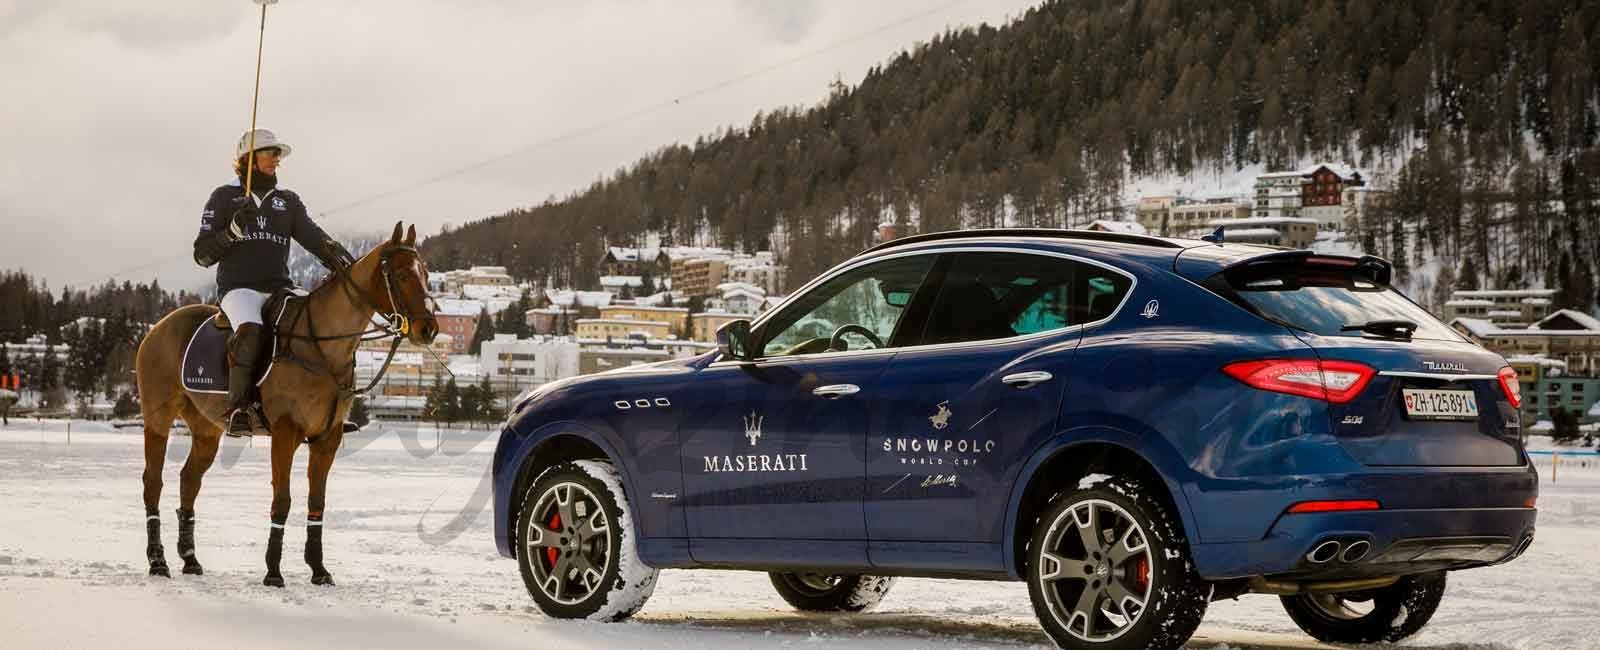 Maserati Snow Polo World Cup - St Moritz - 2018